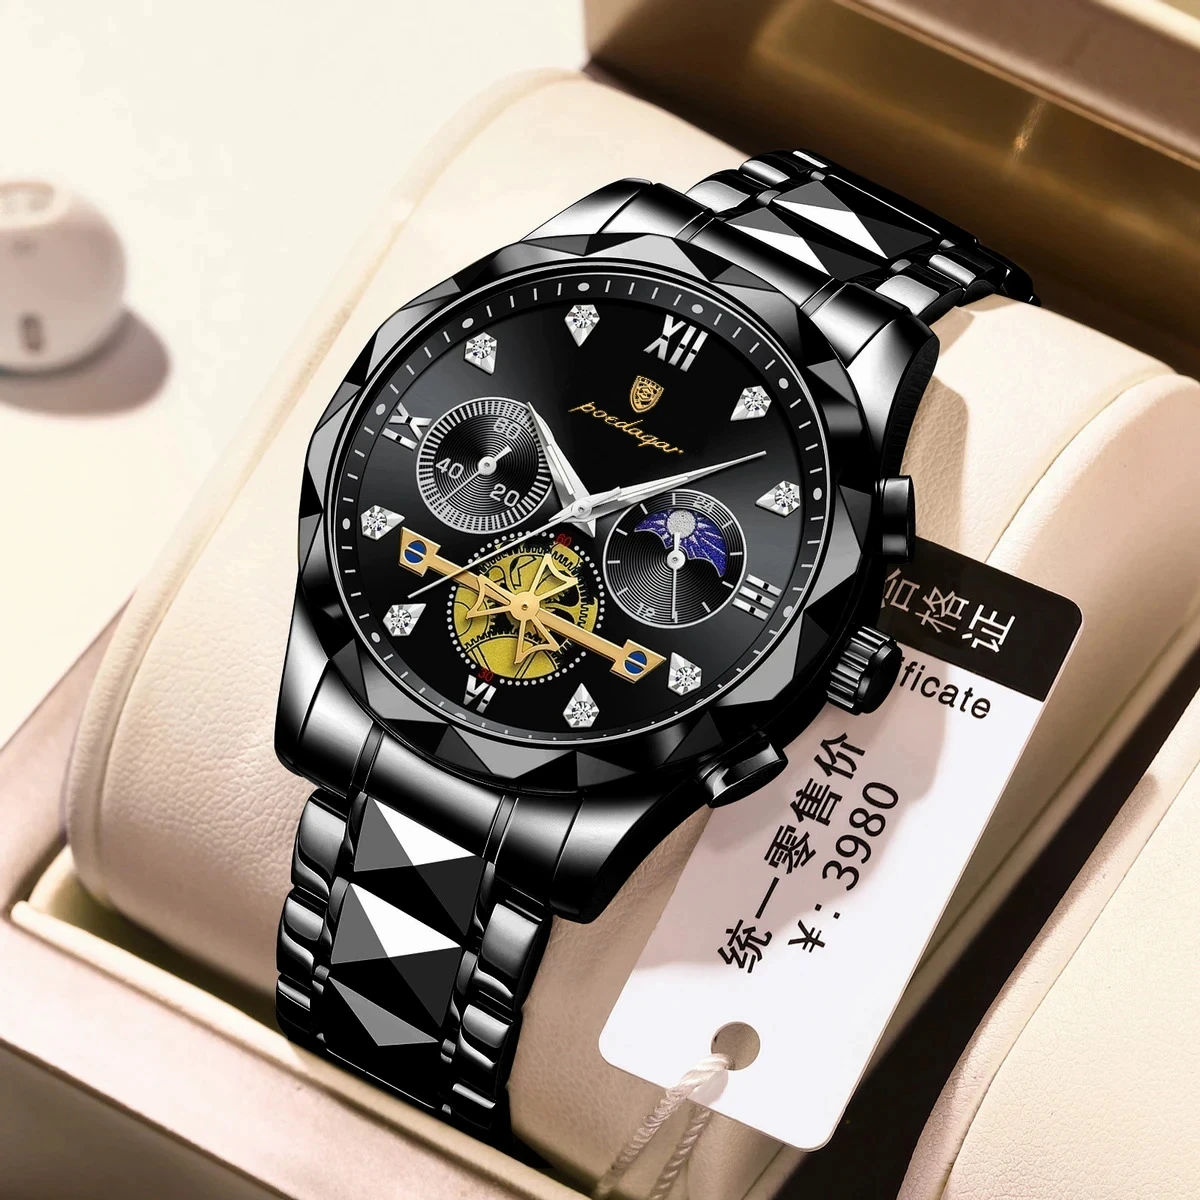 POEDAGAR Luxury Men Watches Business Top Brand Man Wristwatch Waterproof Luminous Date Week Quartz Men's Watch High Quality+Box-BLACK